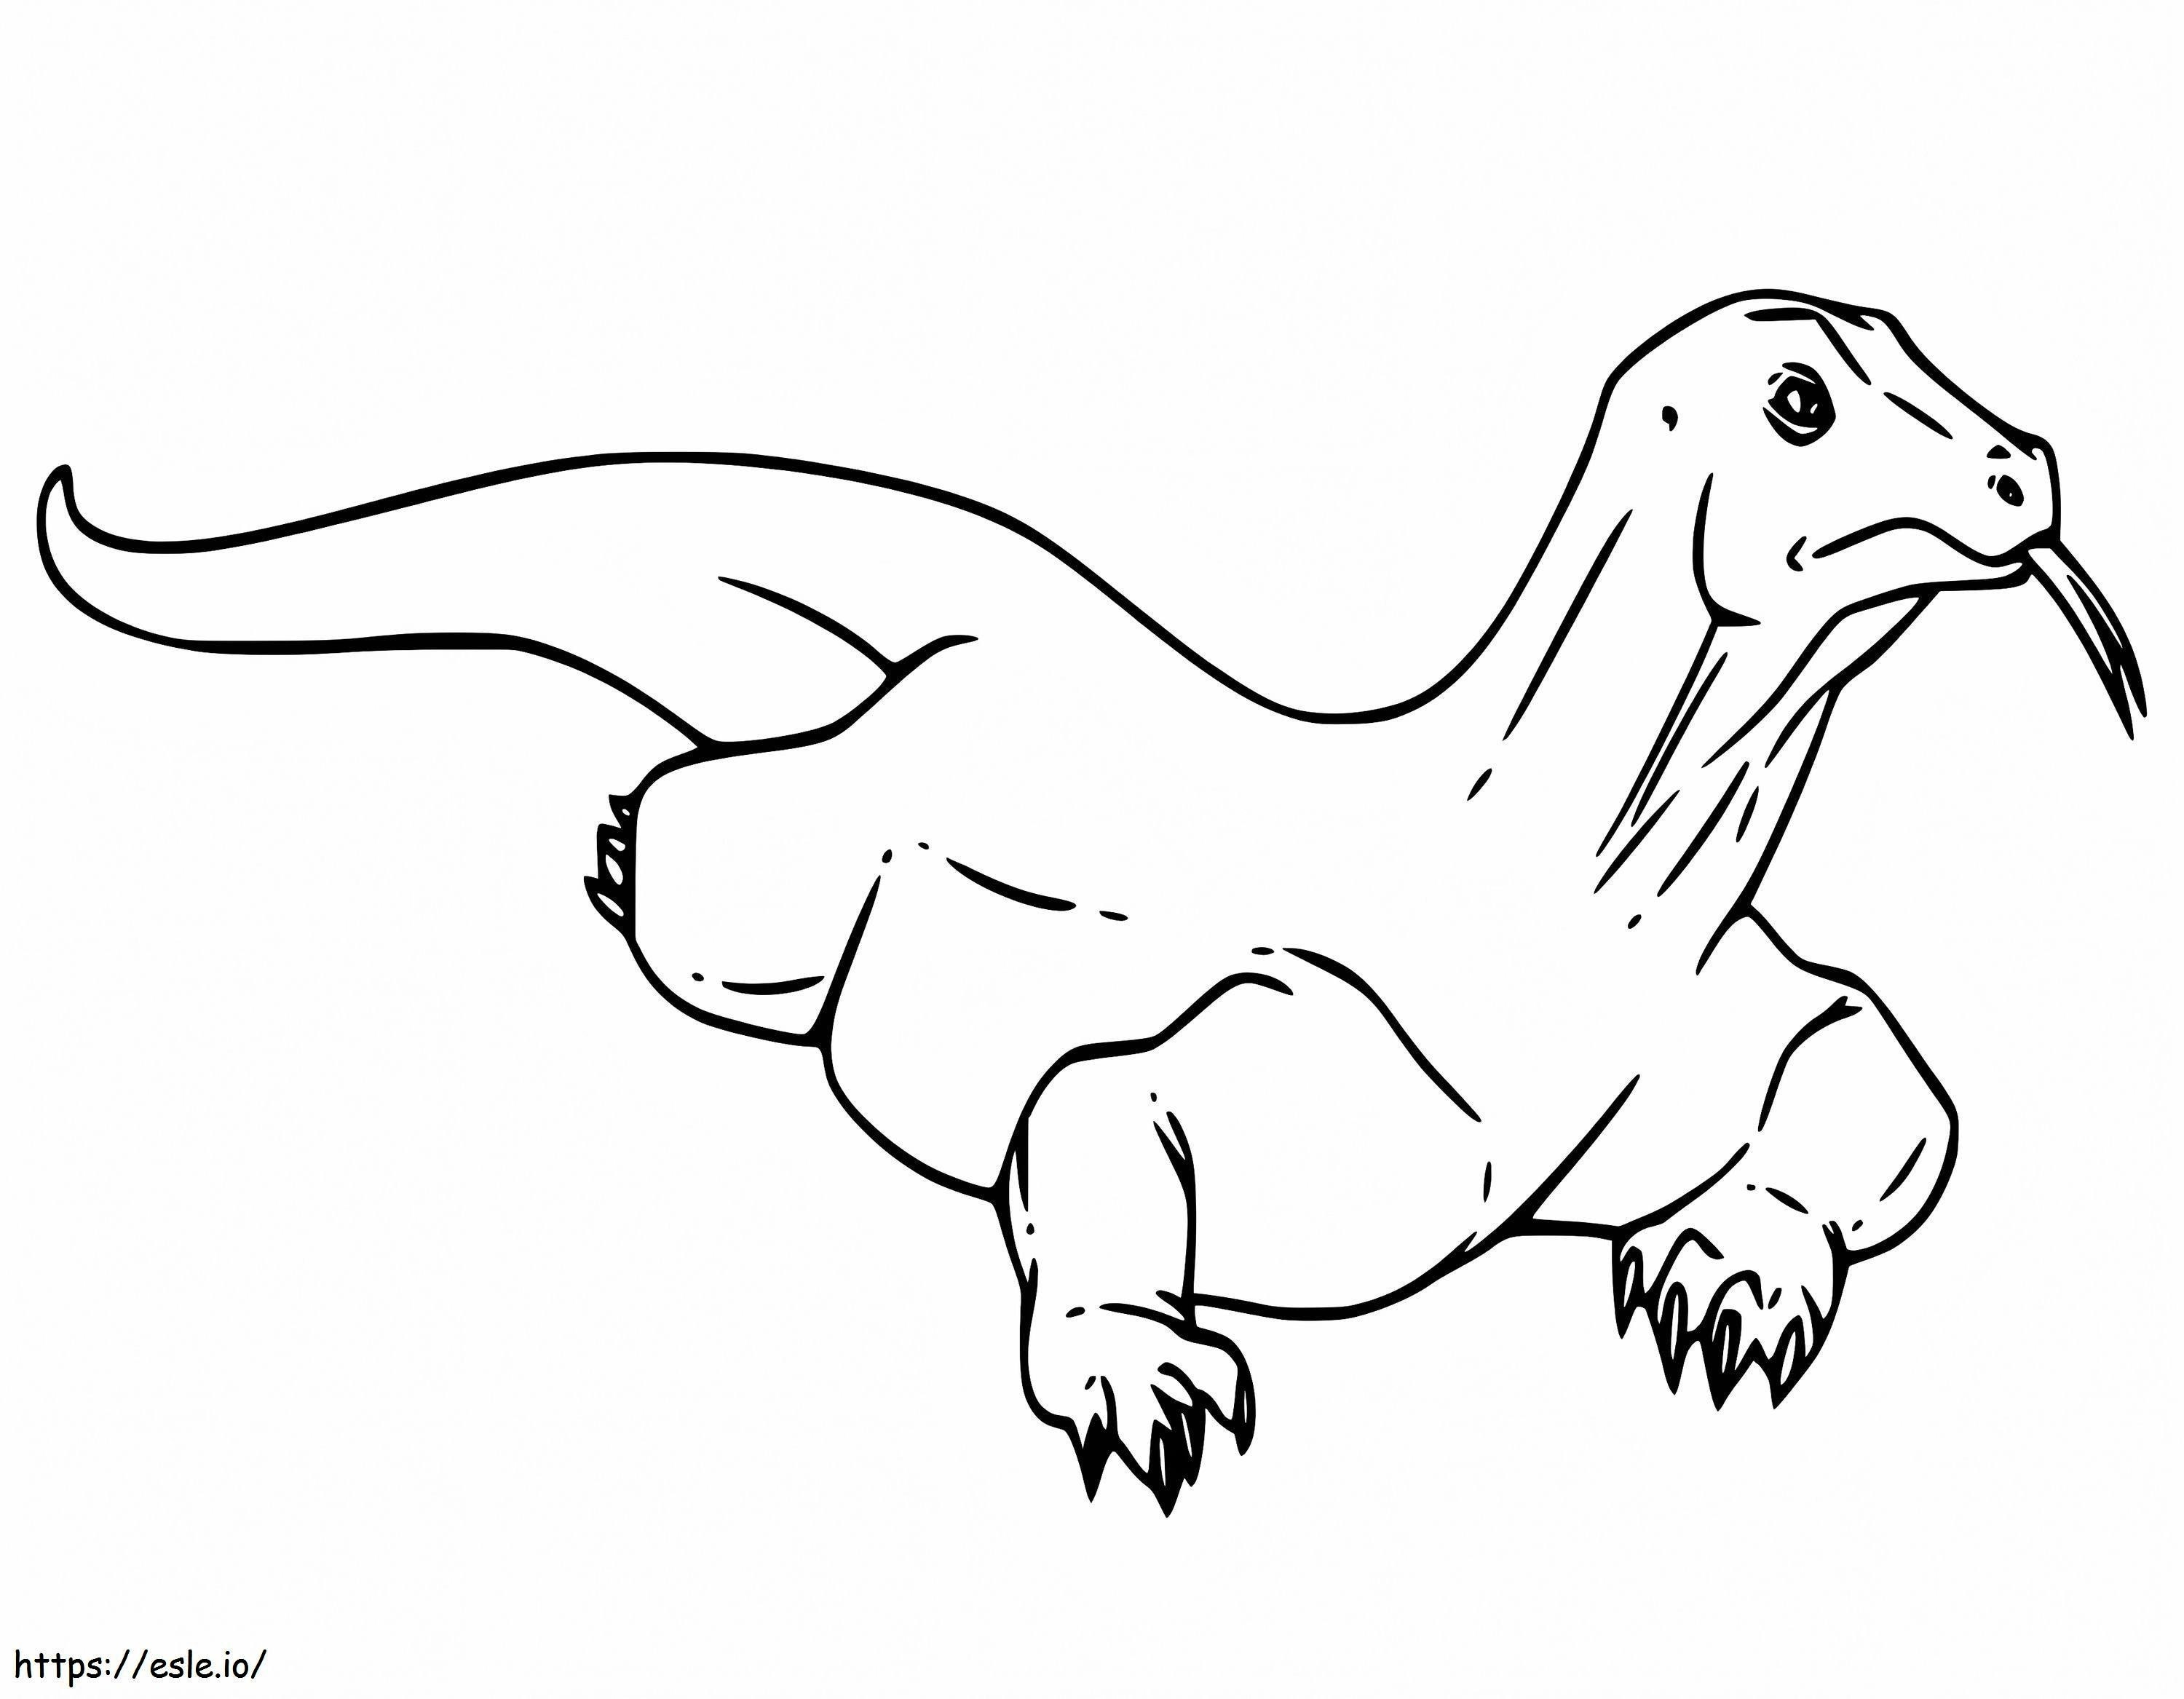 Coloriage Dragon de Komodo normal à imprimer dessin